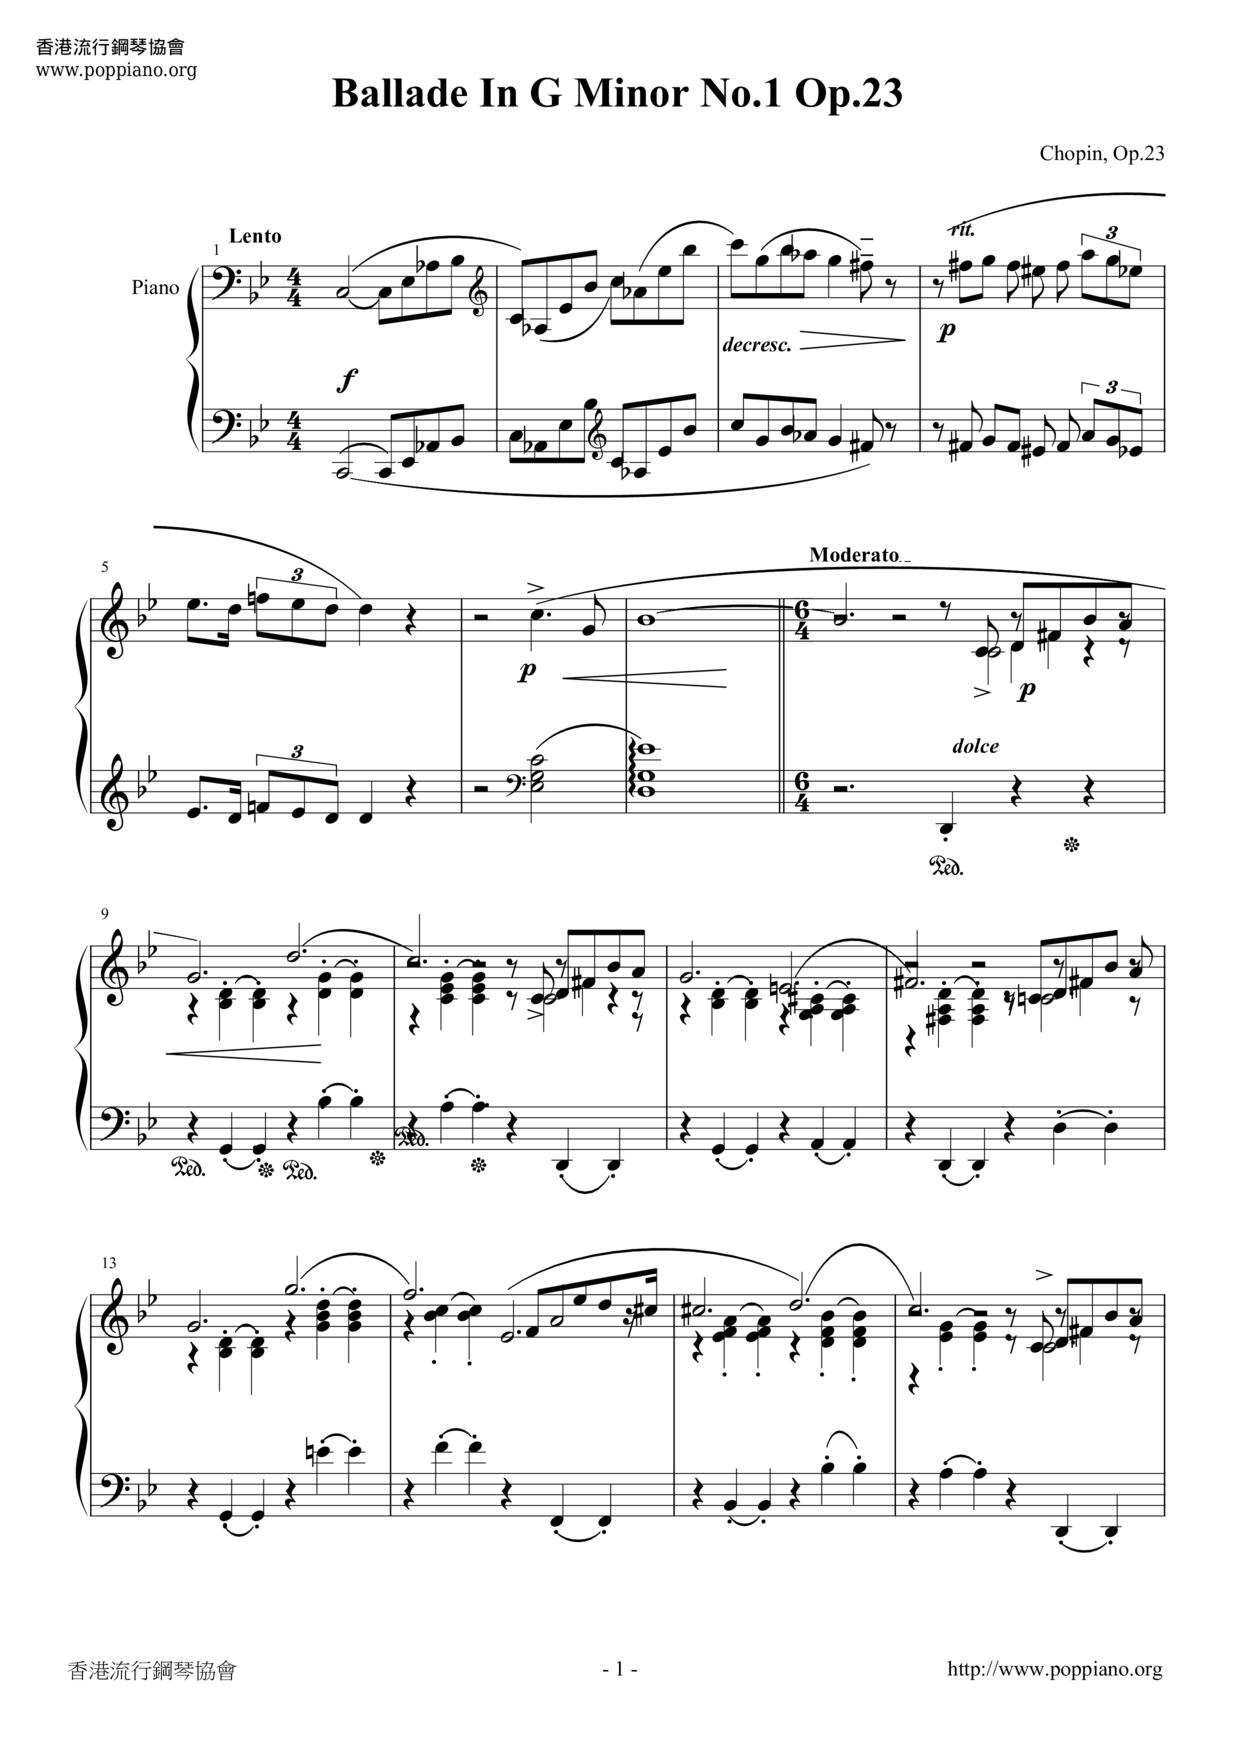 Ballade In G Minor No. 1 Op. 23ピアノ譜